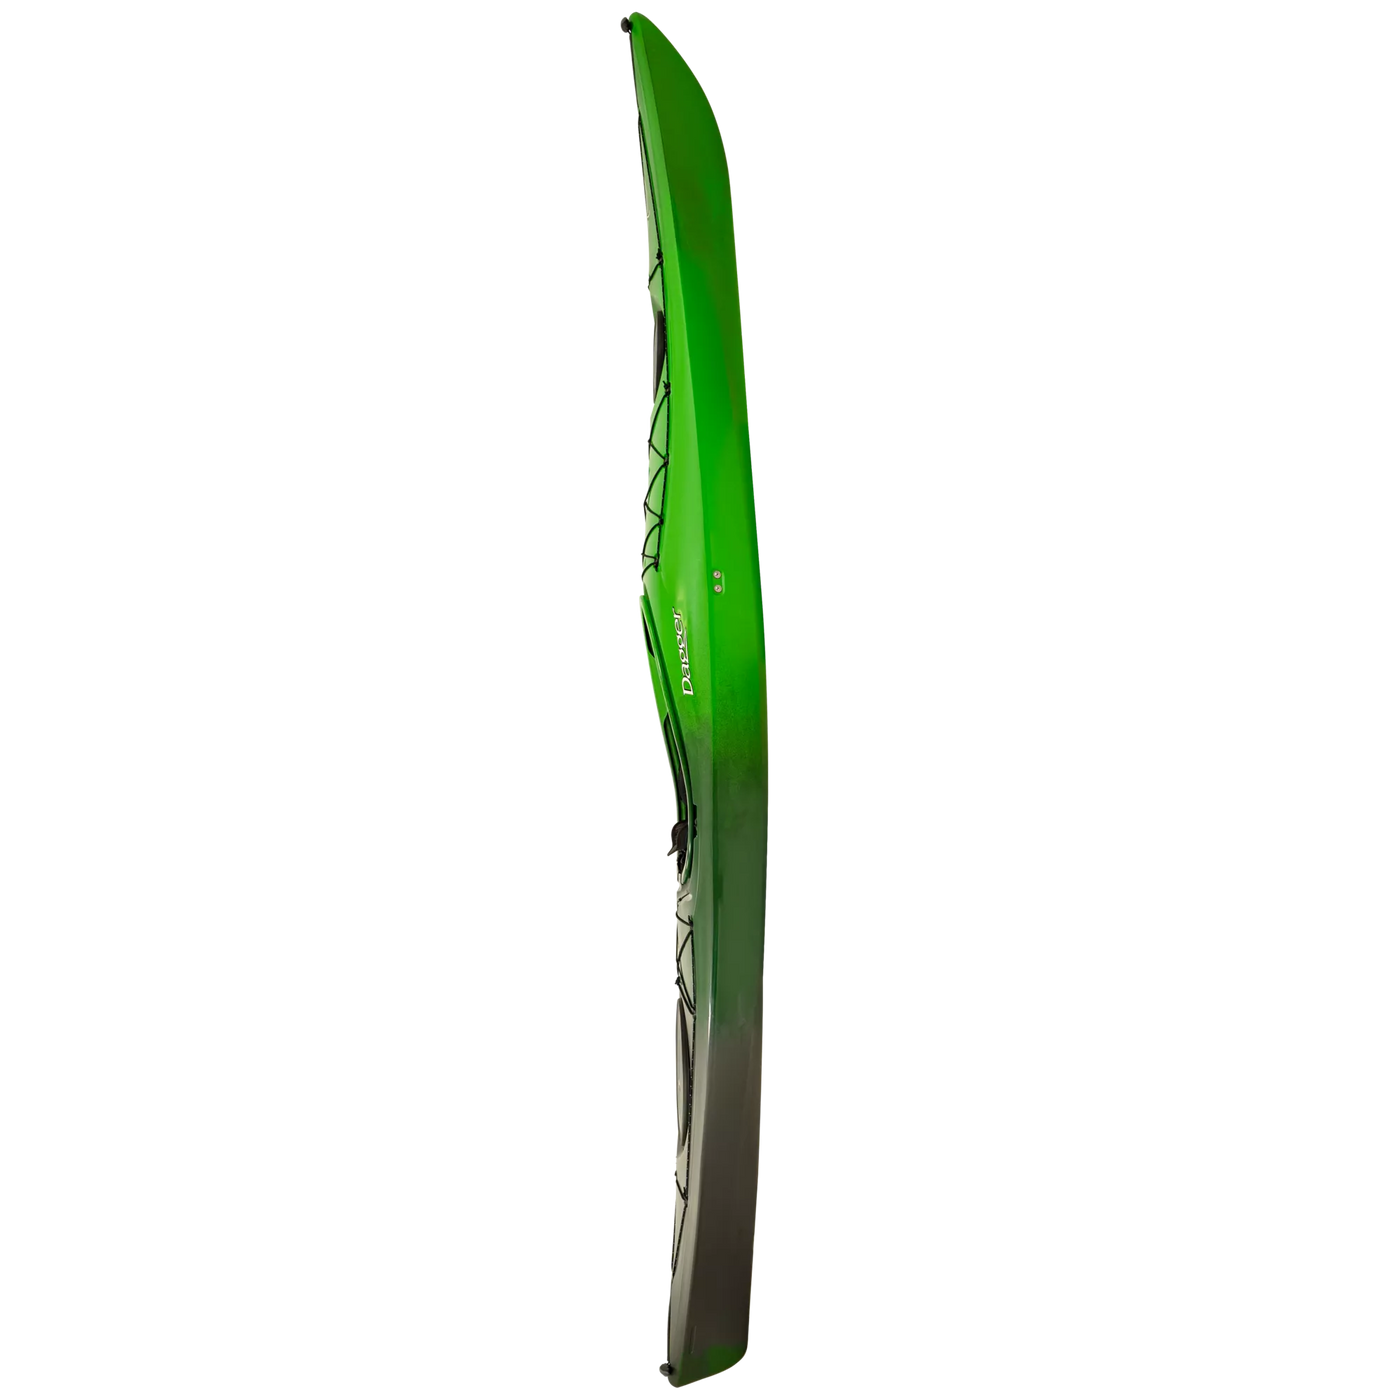 dagger stratos 12.5l green side